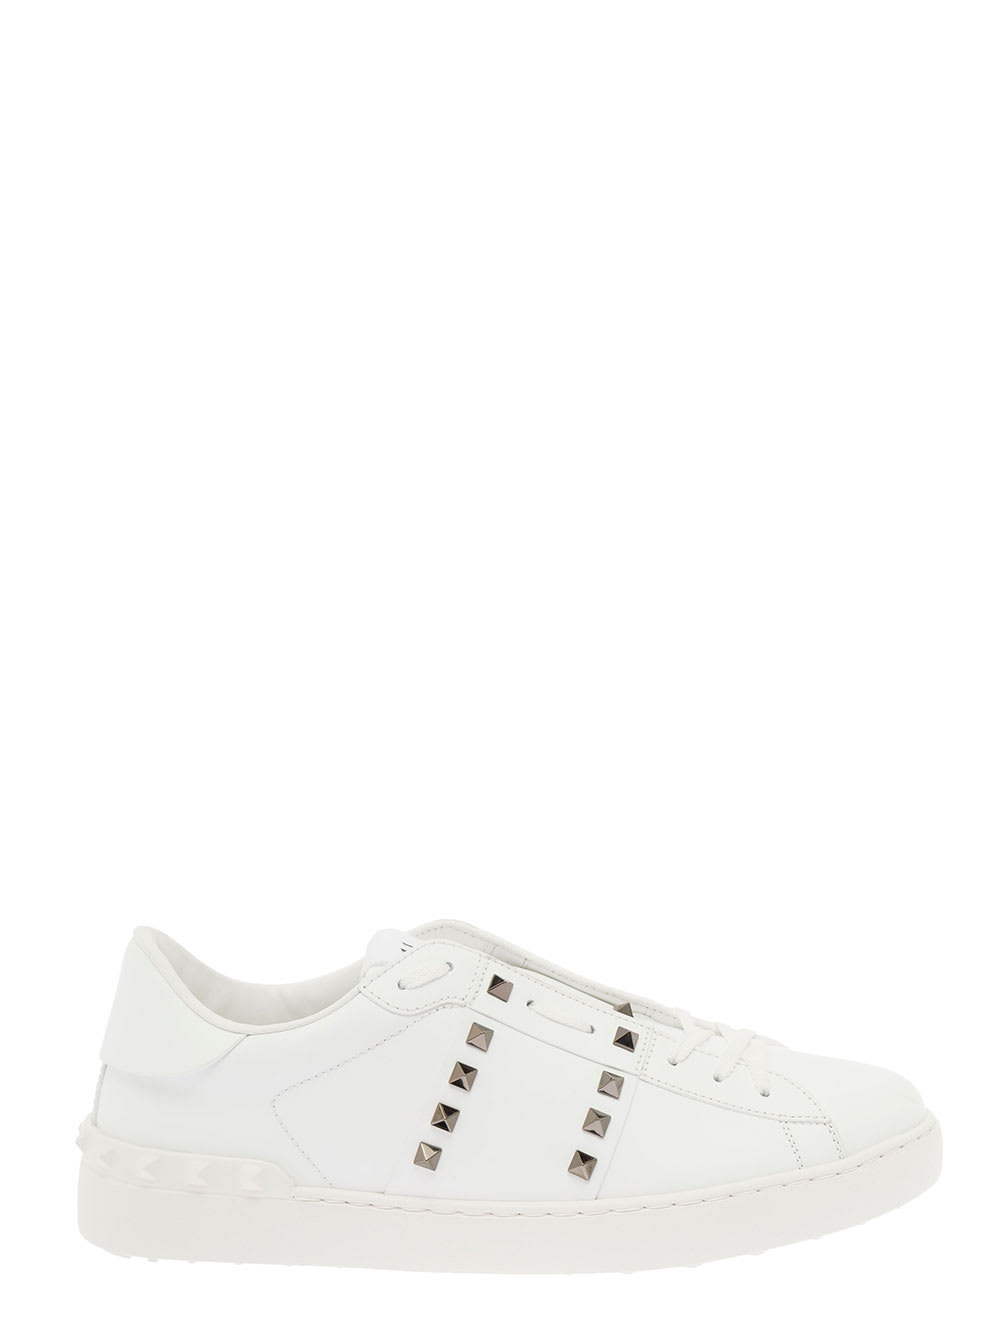 Valentino Garavani Rockstud Untitled White Leather Sneakers Valentino Man